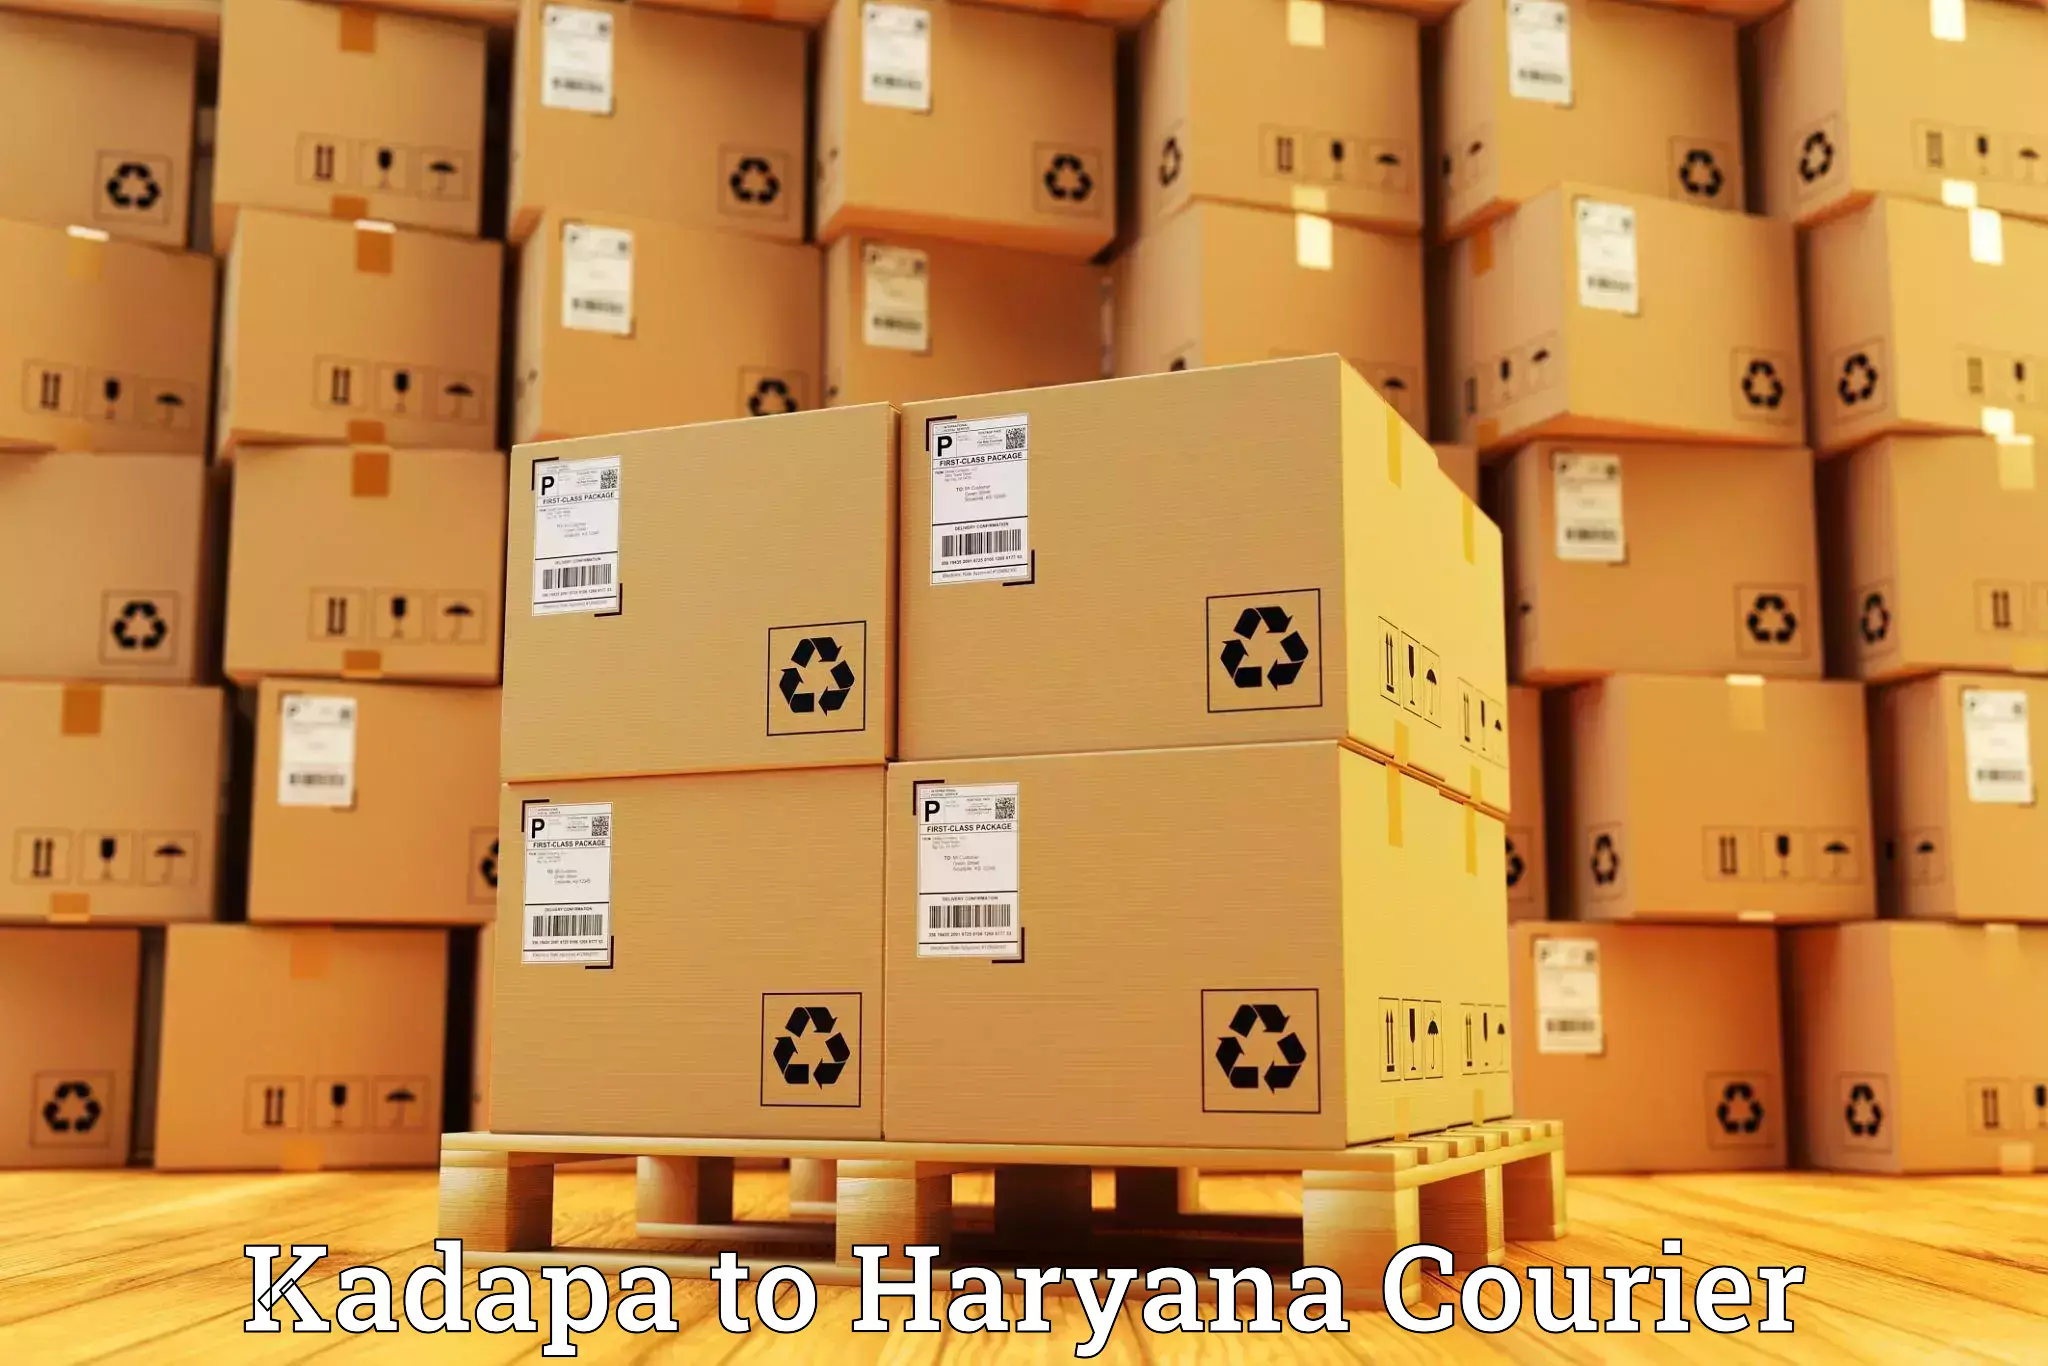 Global logistics network Kadapa to Bhiwani